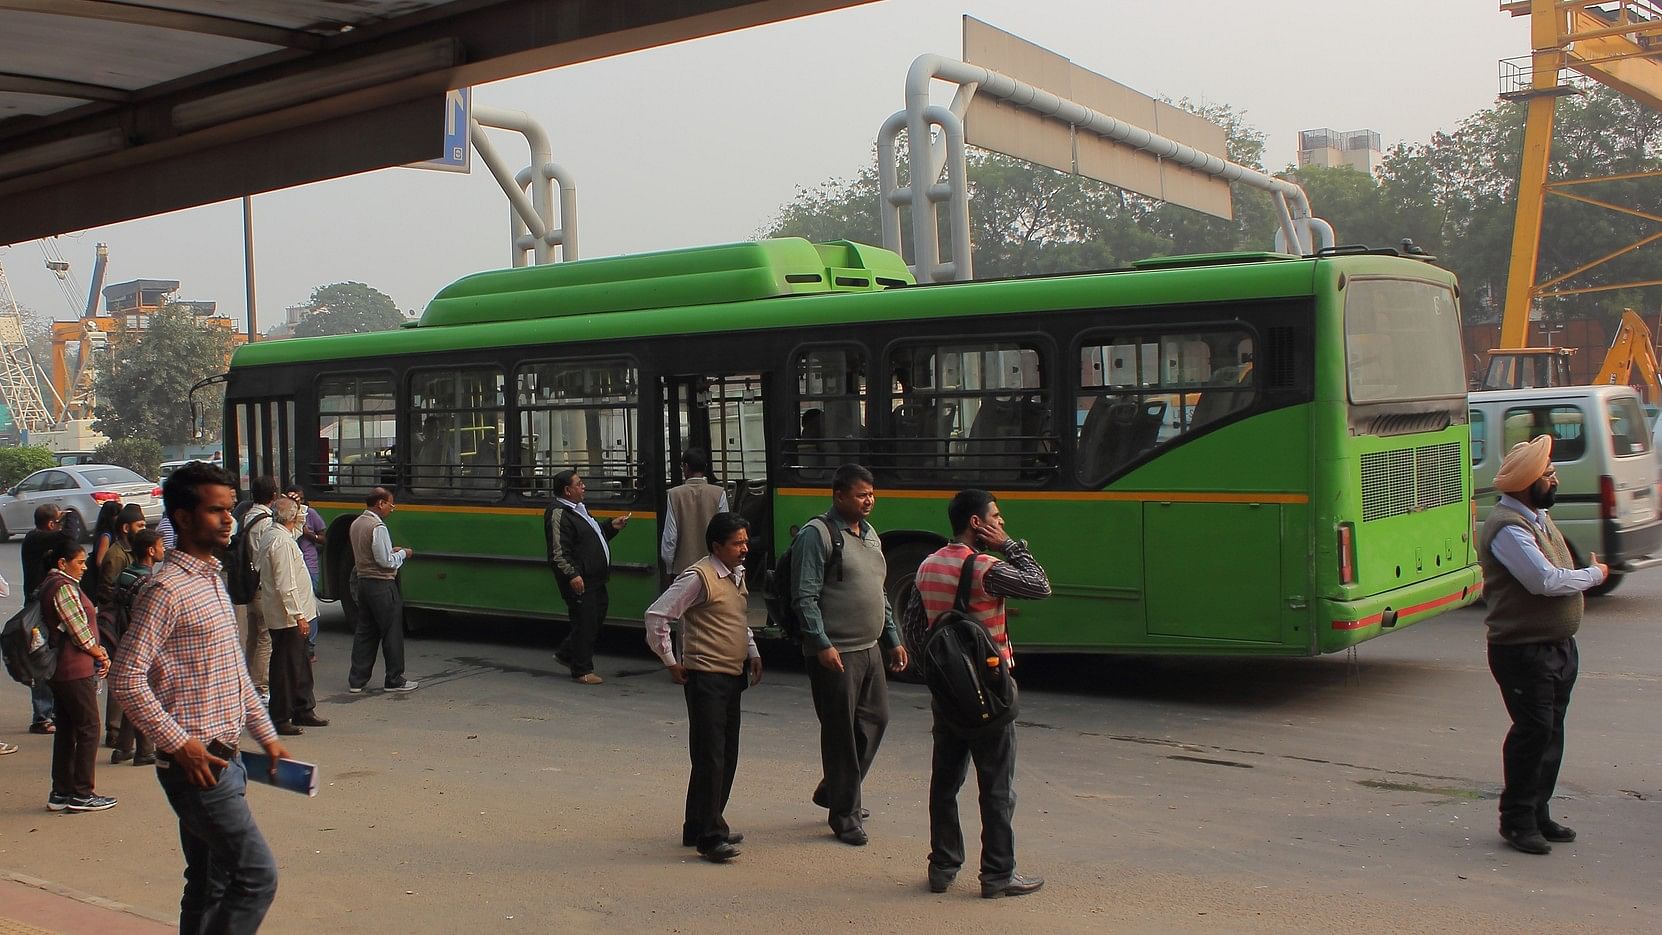 <div class="paragraphs"><p>Representative image showing a bus stand in Delhi.</p></div>